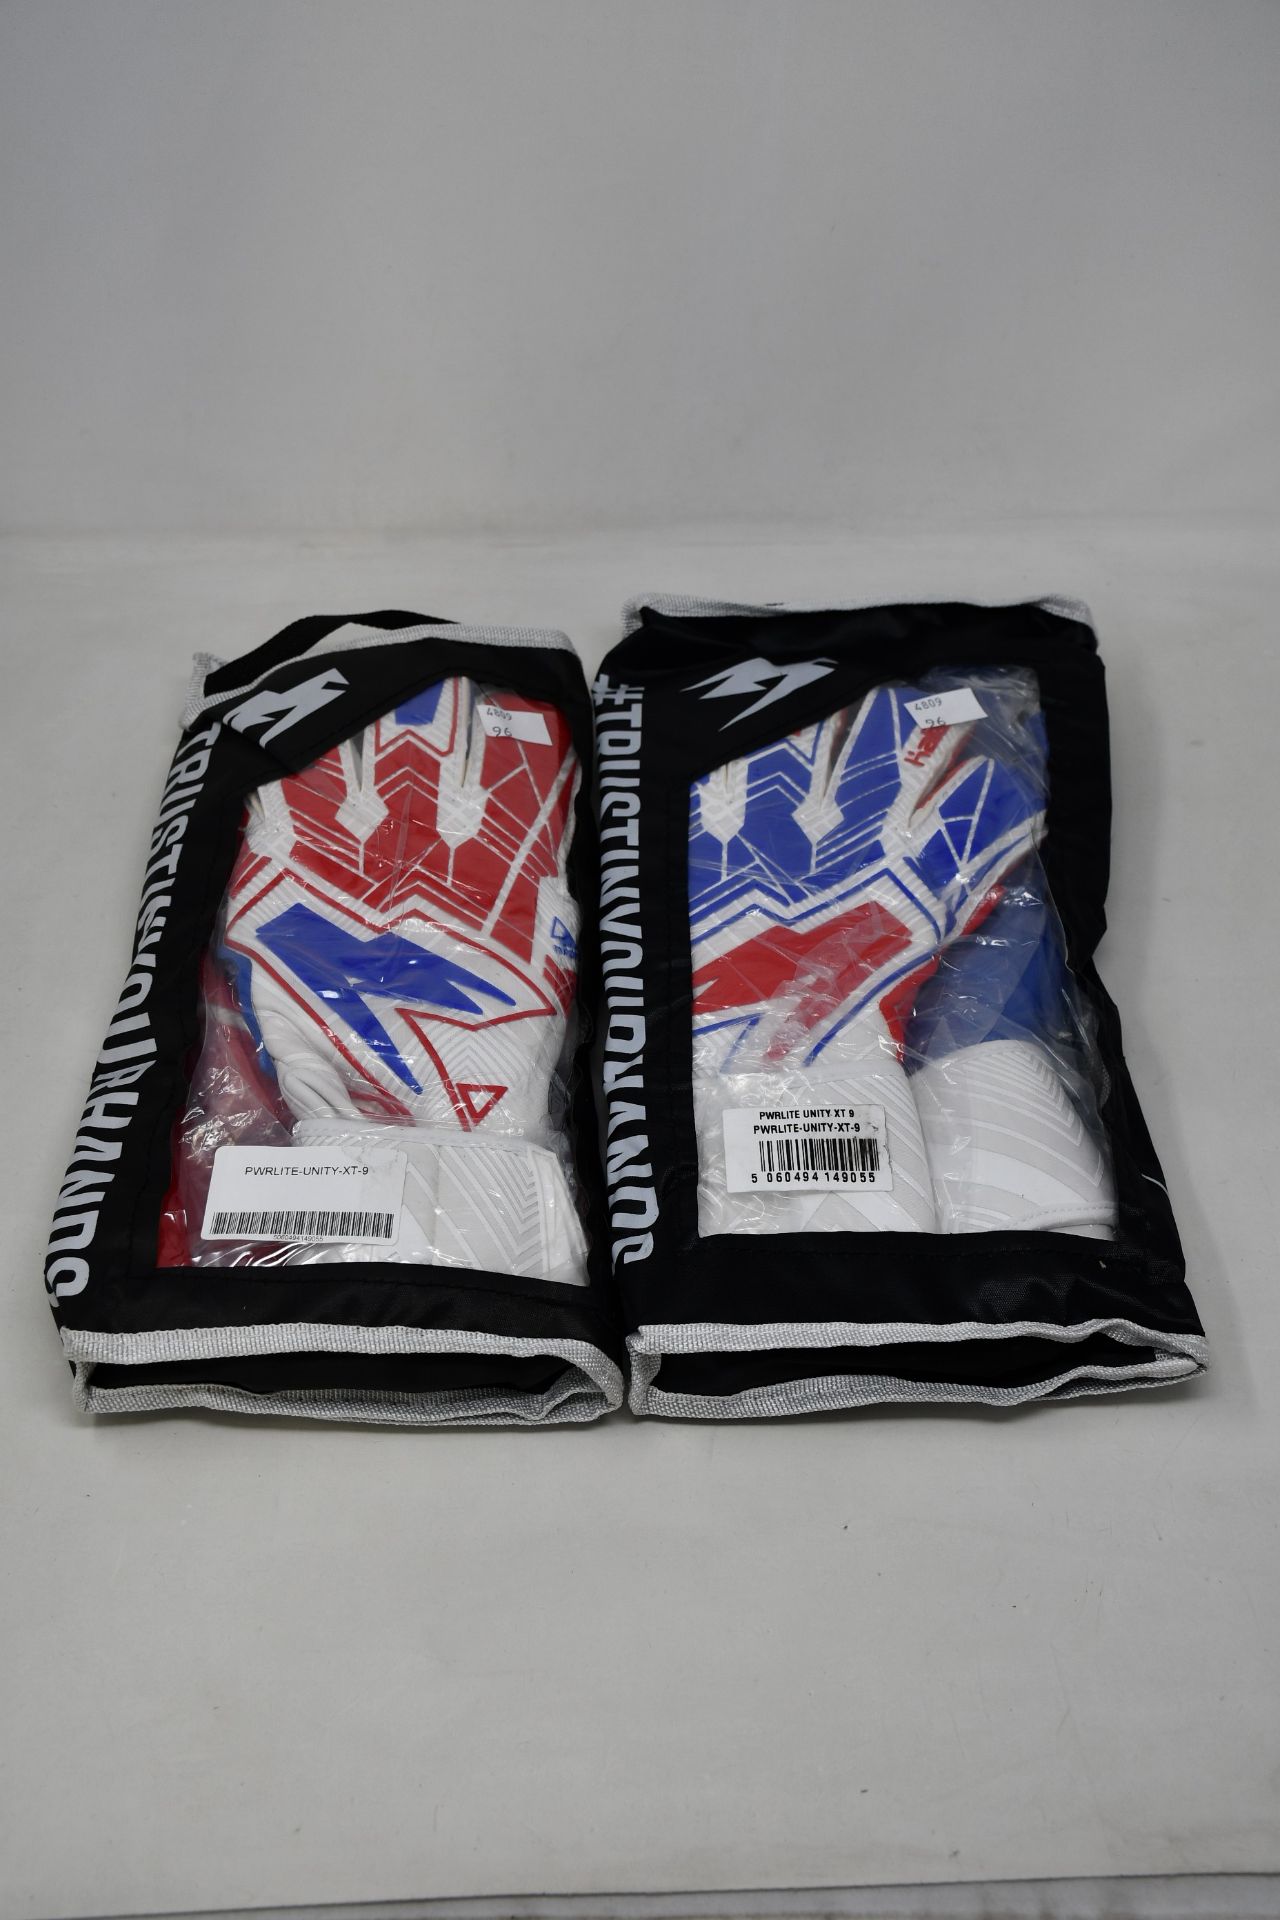 Three pairs of as new Kaliaaer PWRLITE UNITY Negative goal keeper gloves (Size 10).